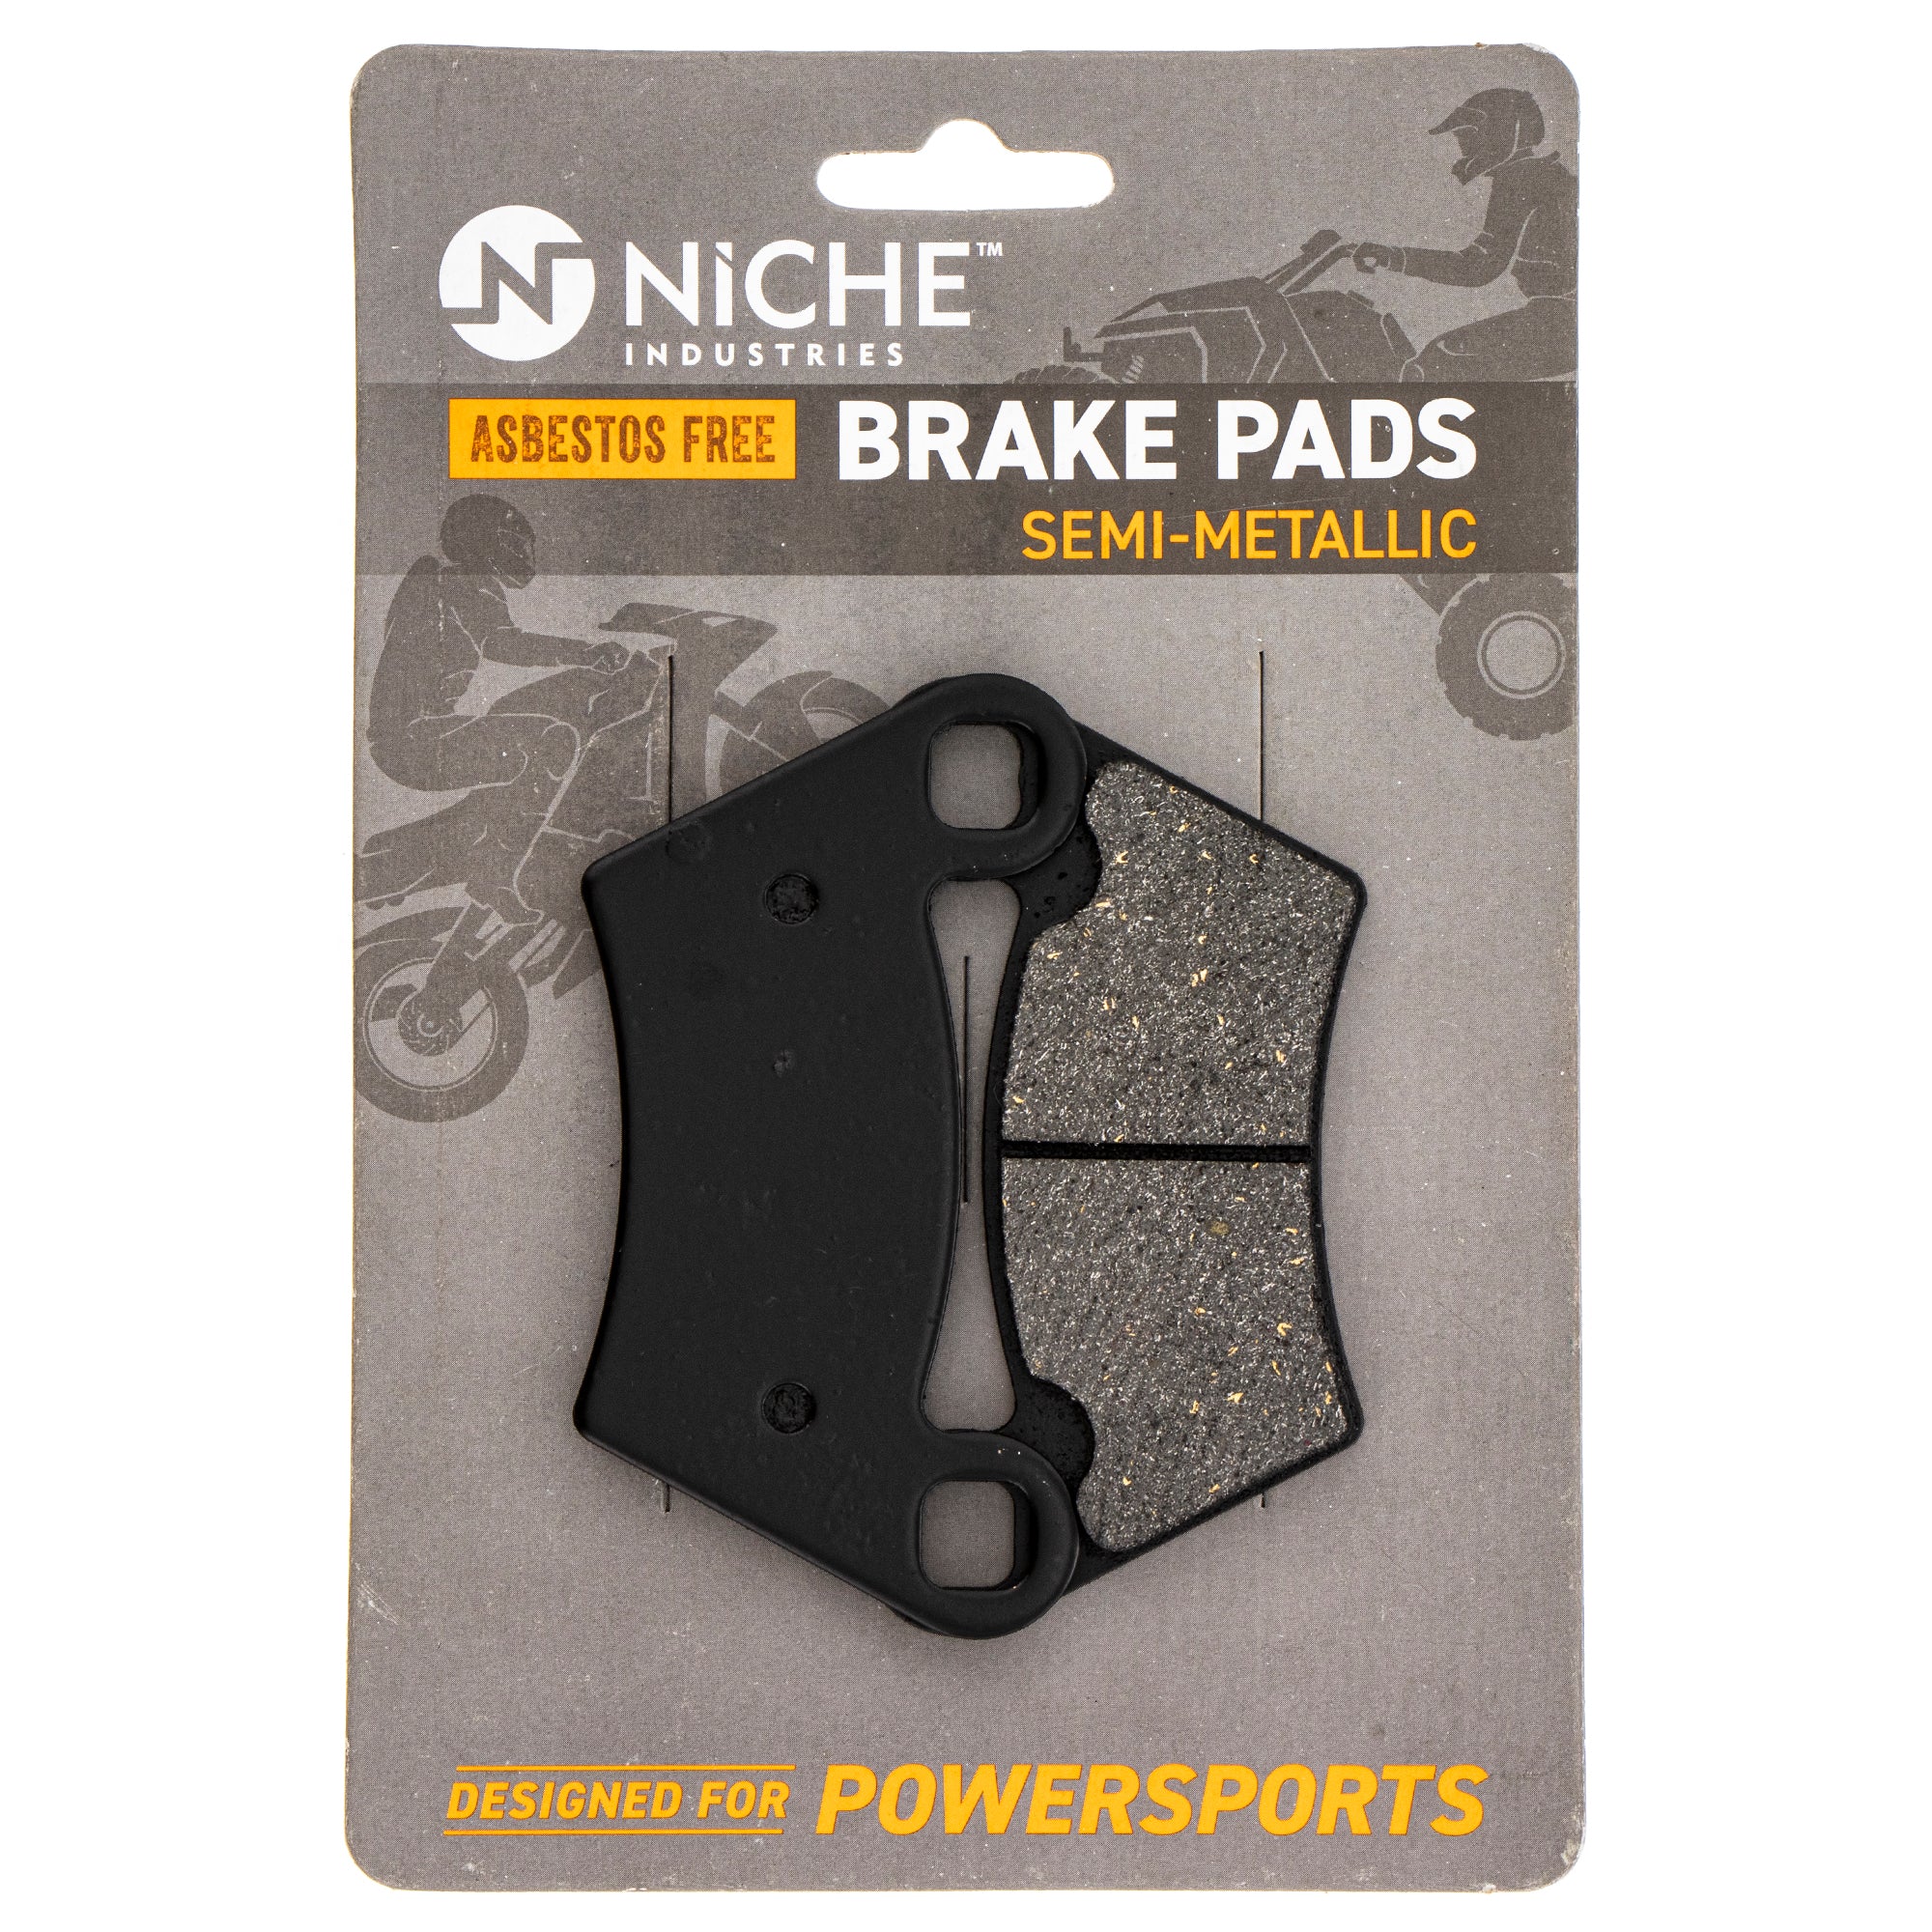 NICHE MK1001106 Brake Caliper & Pads Kit for Polaris GEM Sportsman